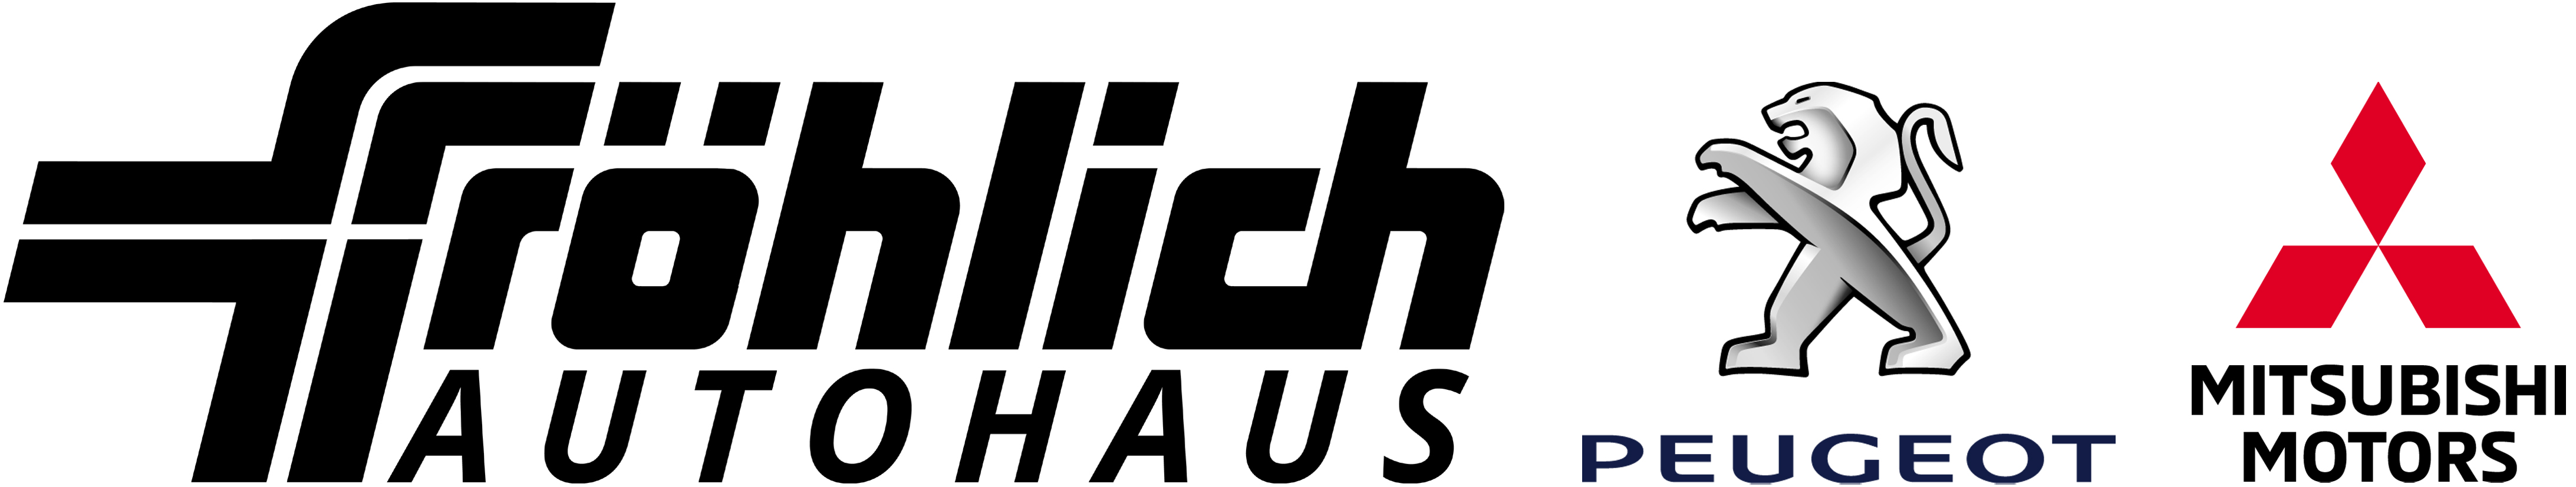 Fröhlich Logo lang PM klein